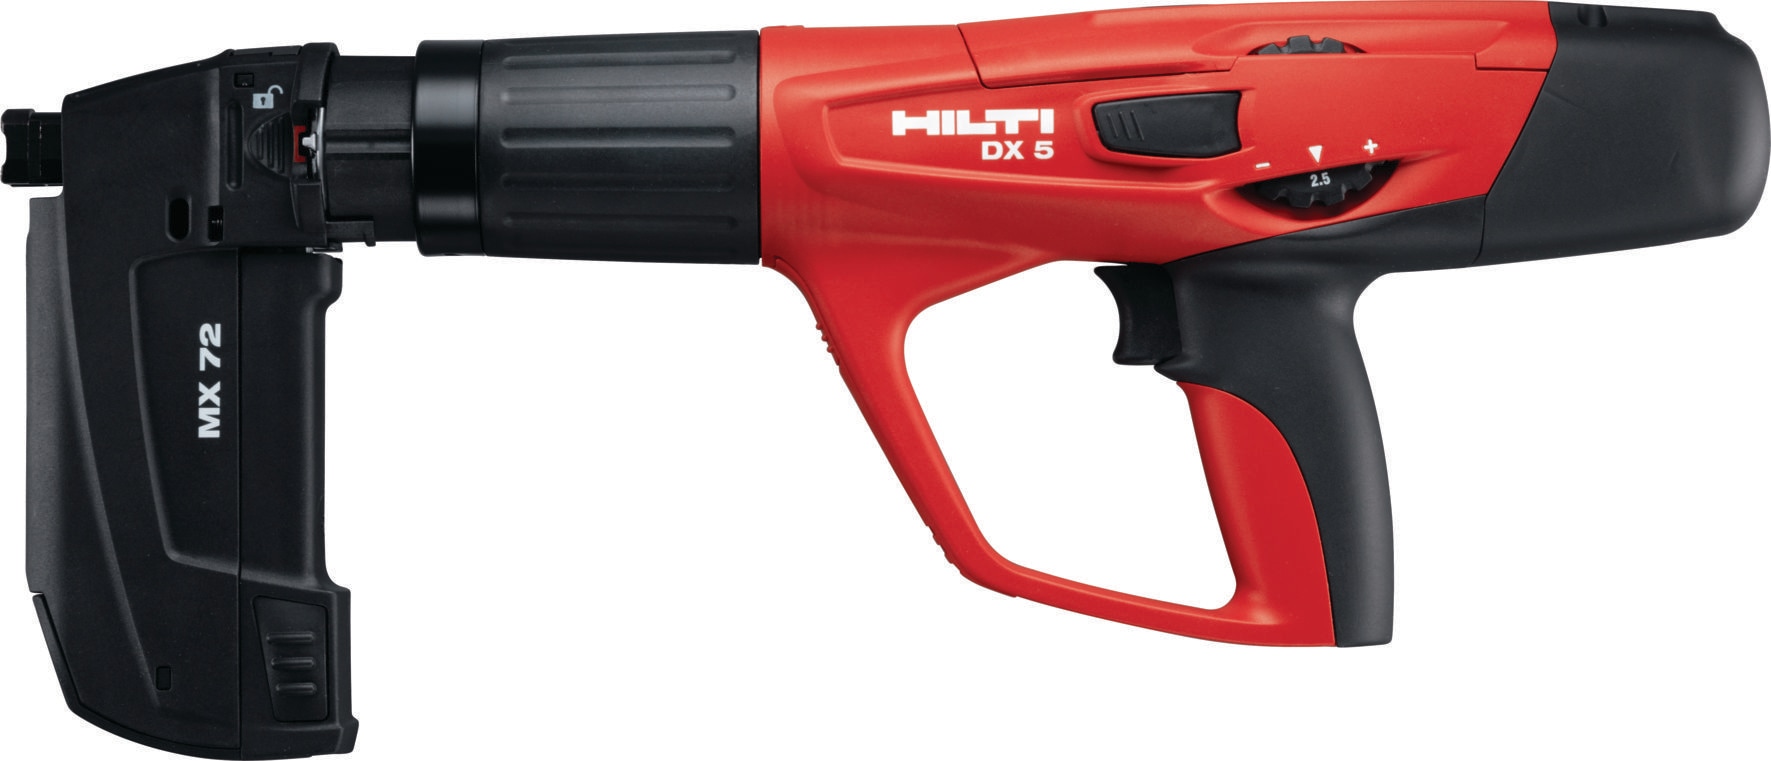 Hilti Hilti DX A40 Powder Actuated Nail Fastening Gun Tool 